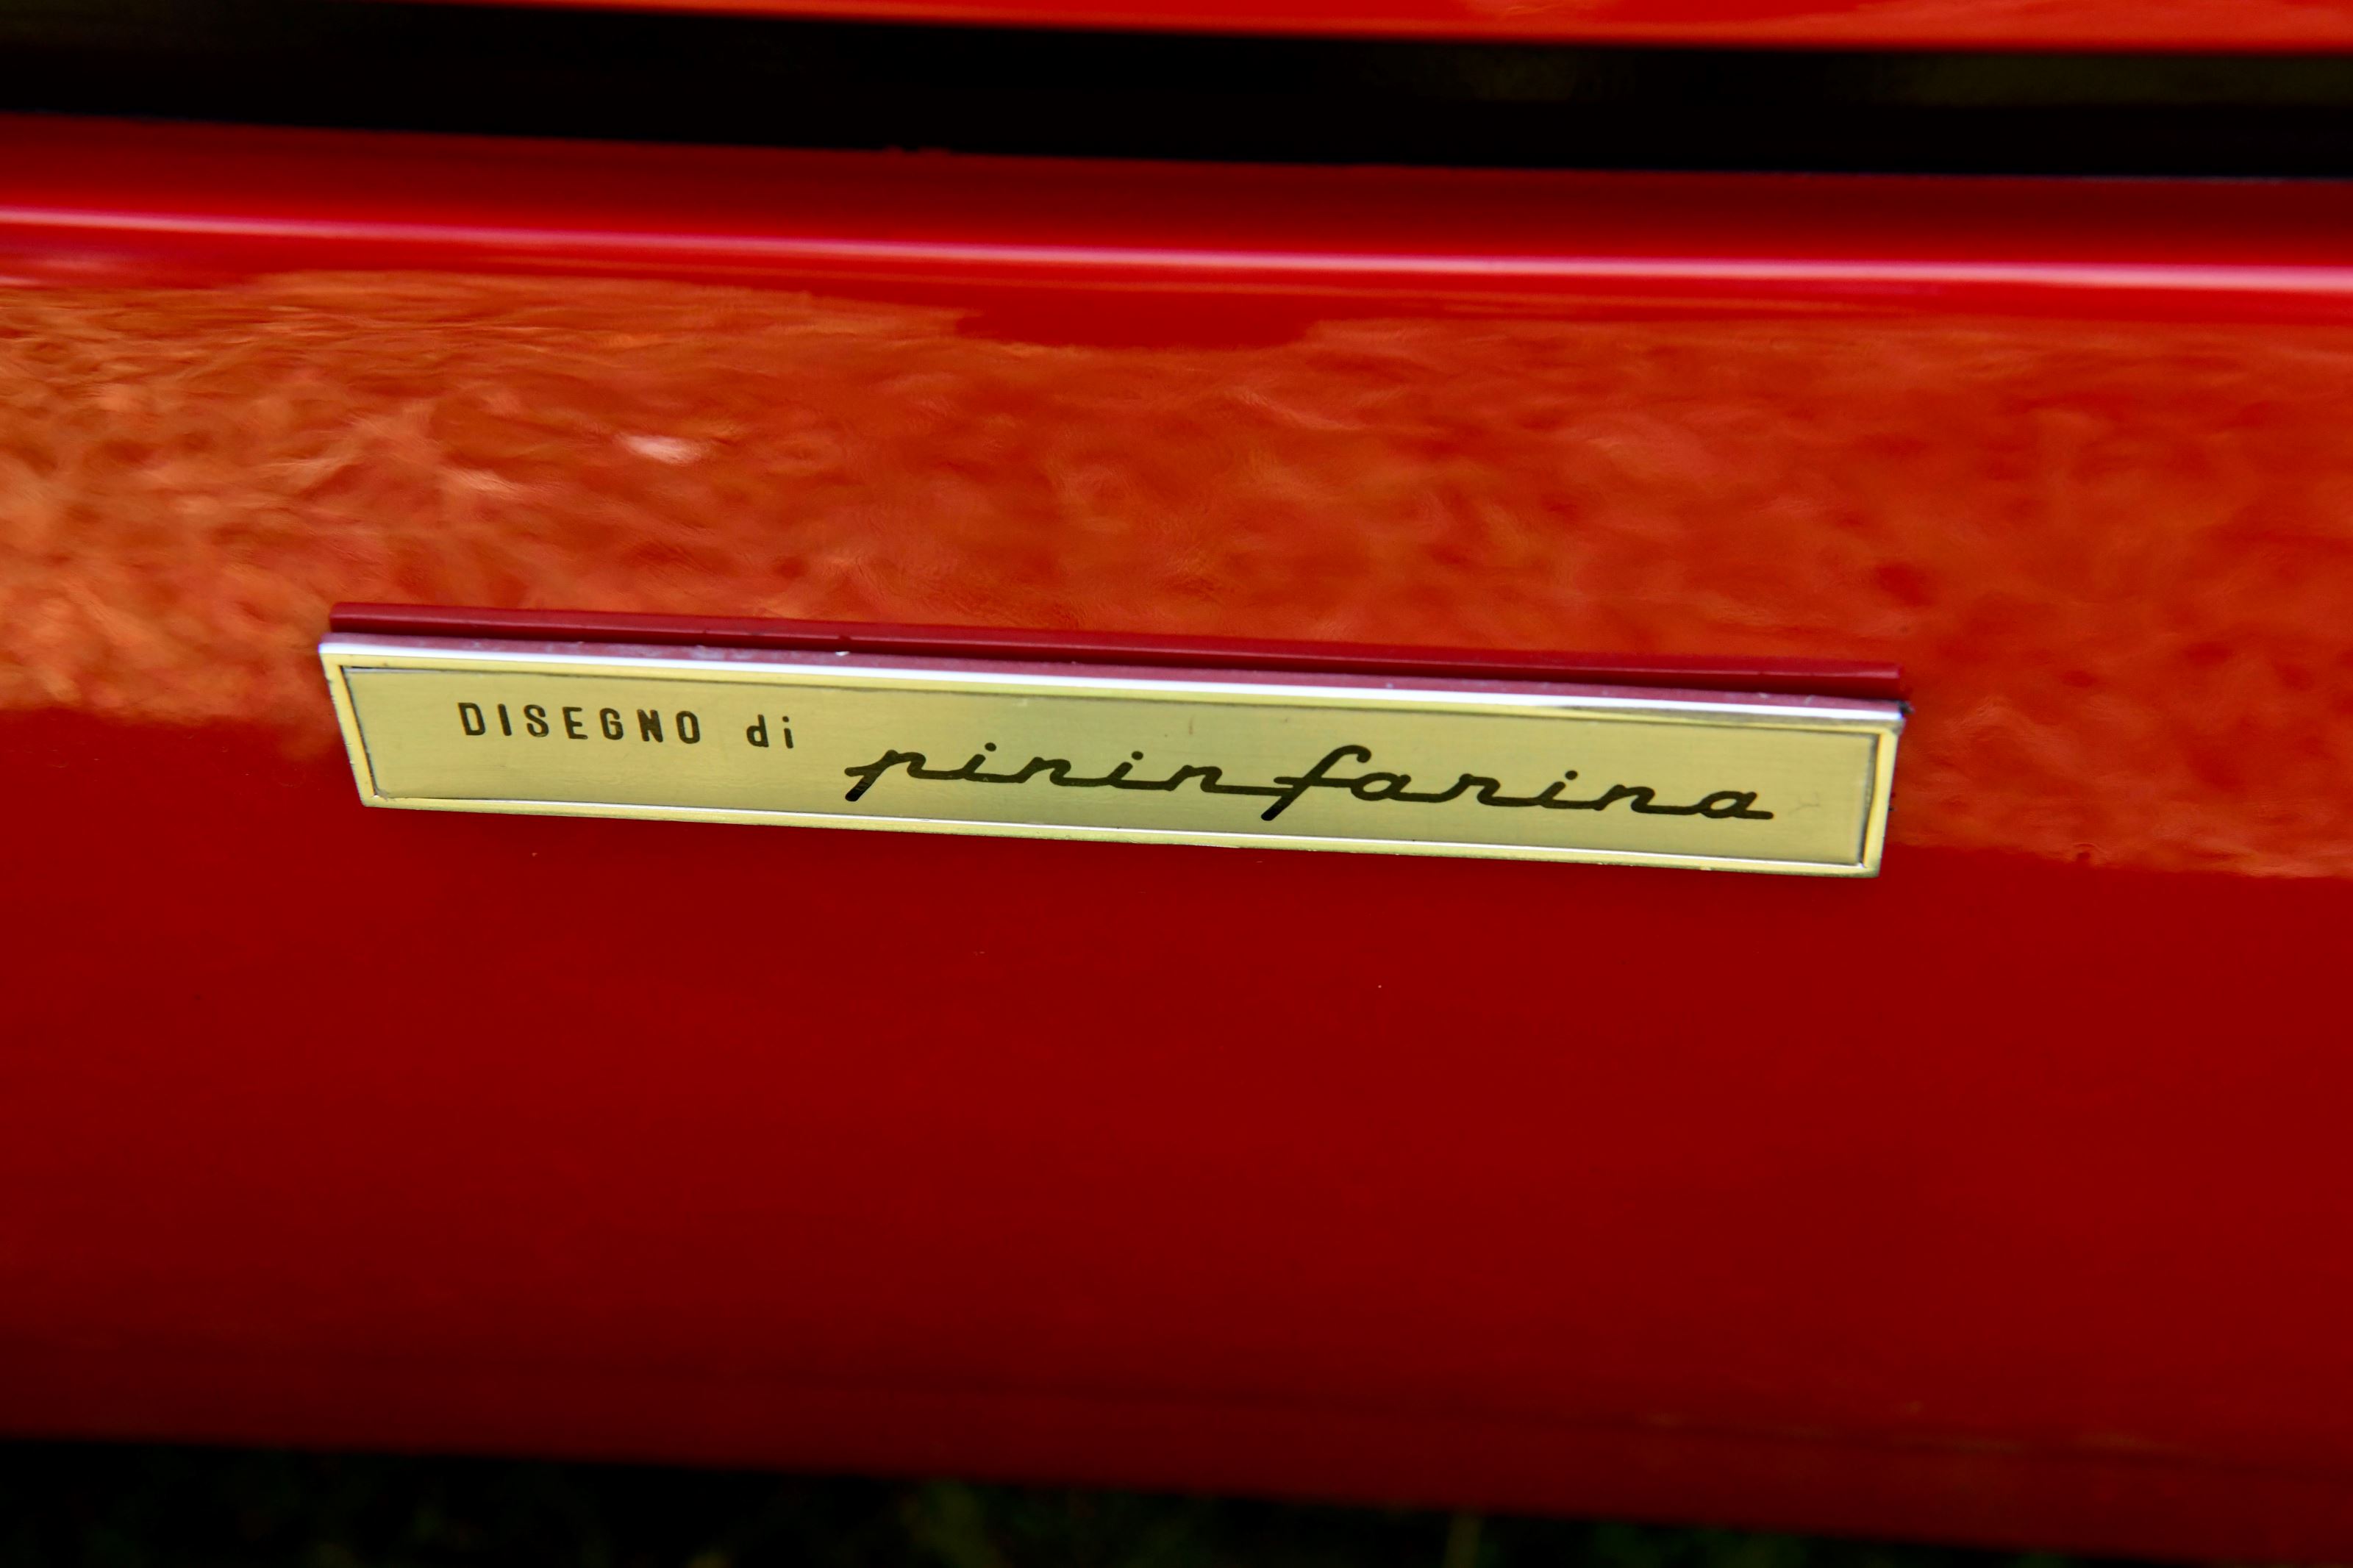 Ferrari 308 gtbi left hand drive rl5goqxiw46dx7tm xbwk